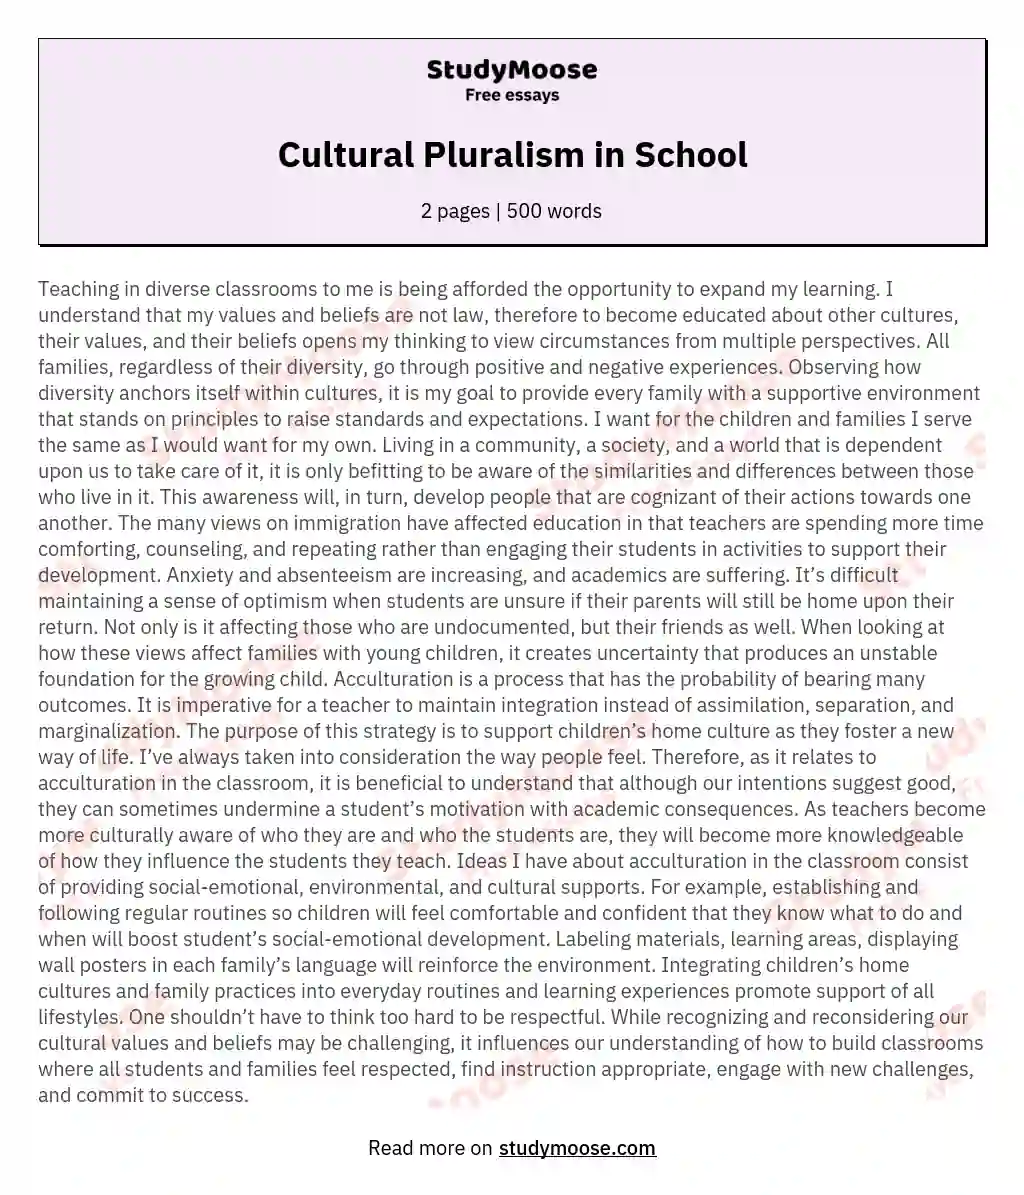 Cultural Pluralism in School essay